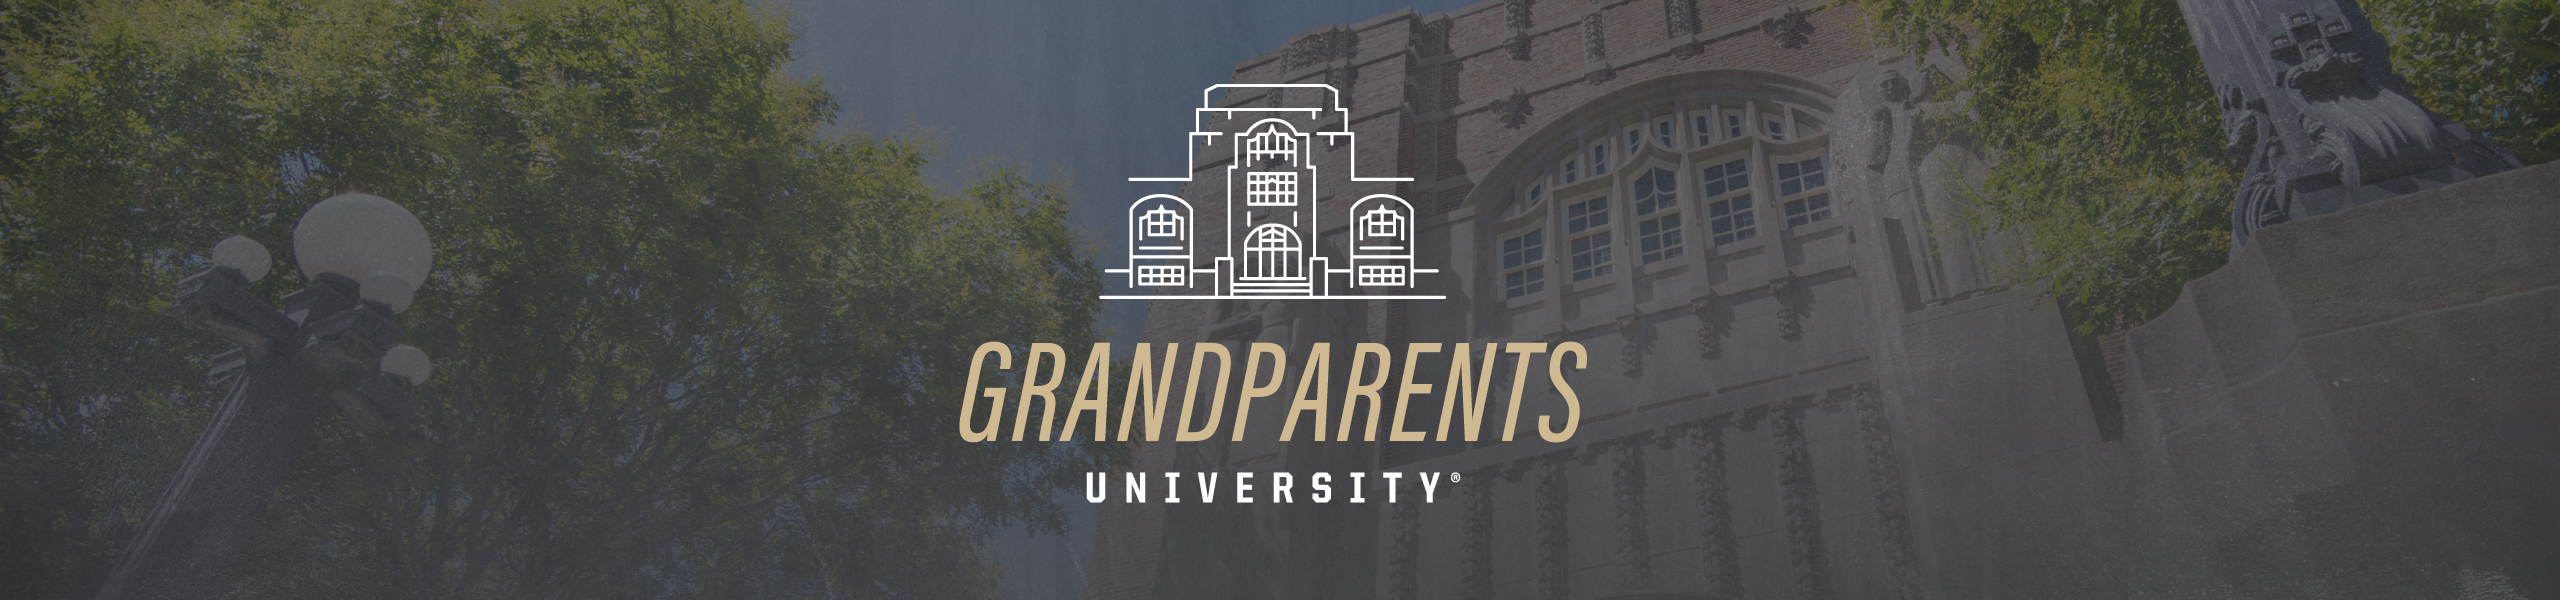 Grandparents University